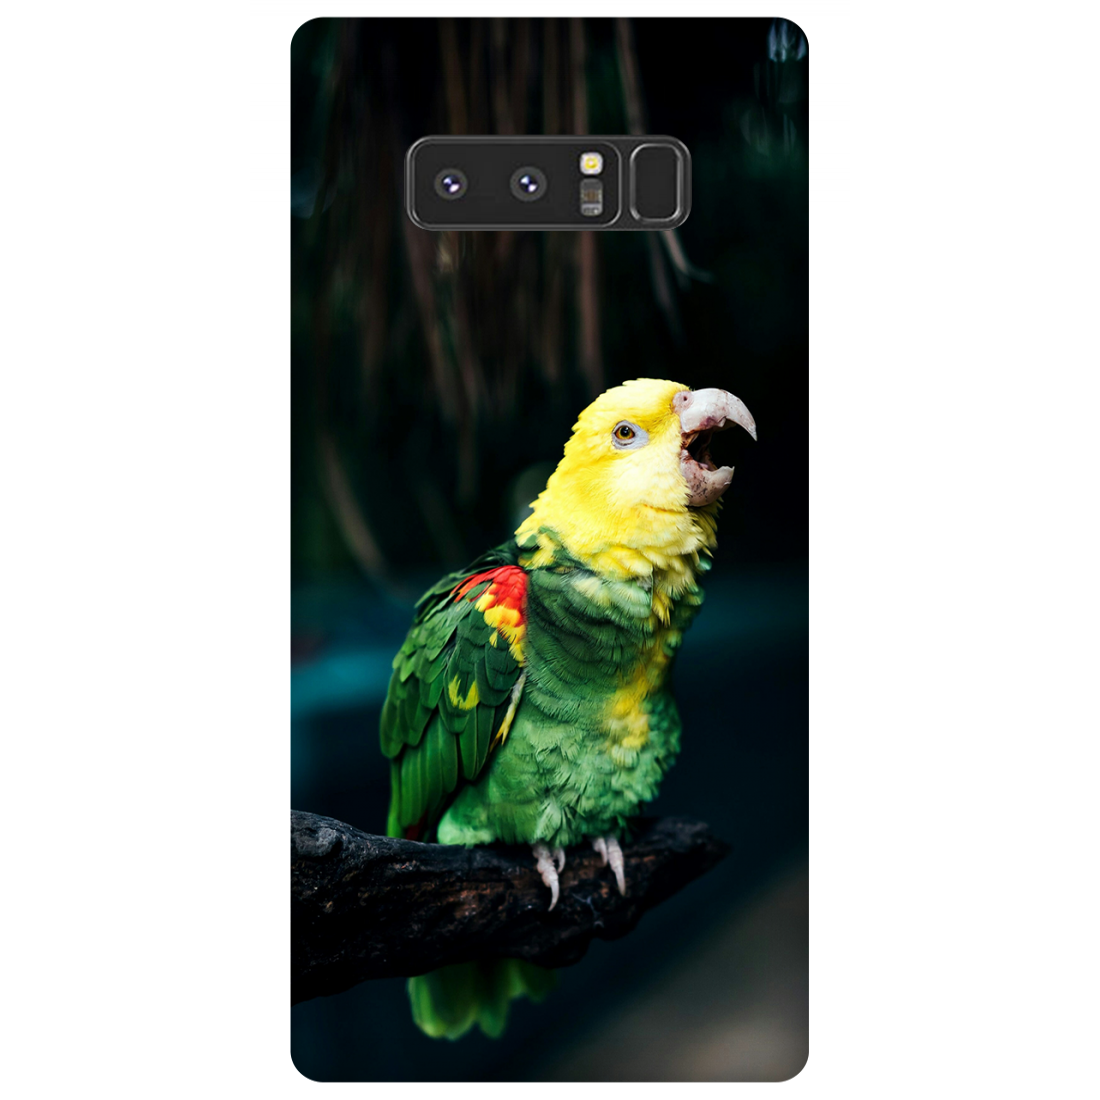 Vocalizing Vibrance: A Parrot Portrait Case Samsung Galaxy Note 8